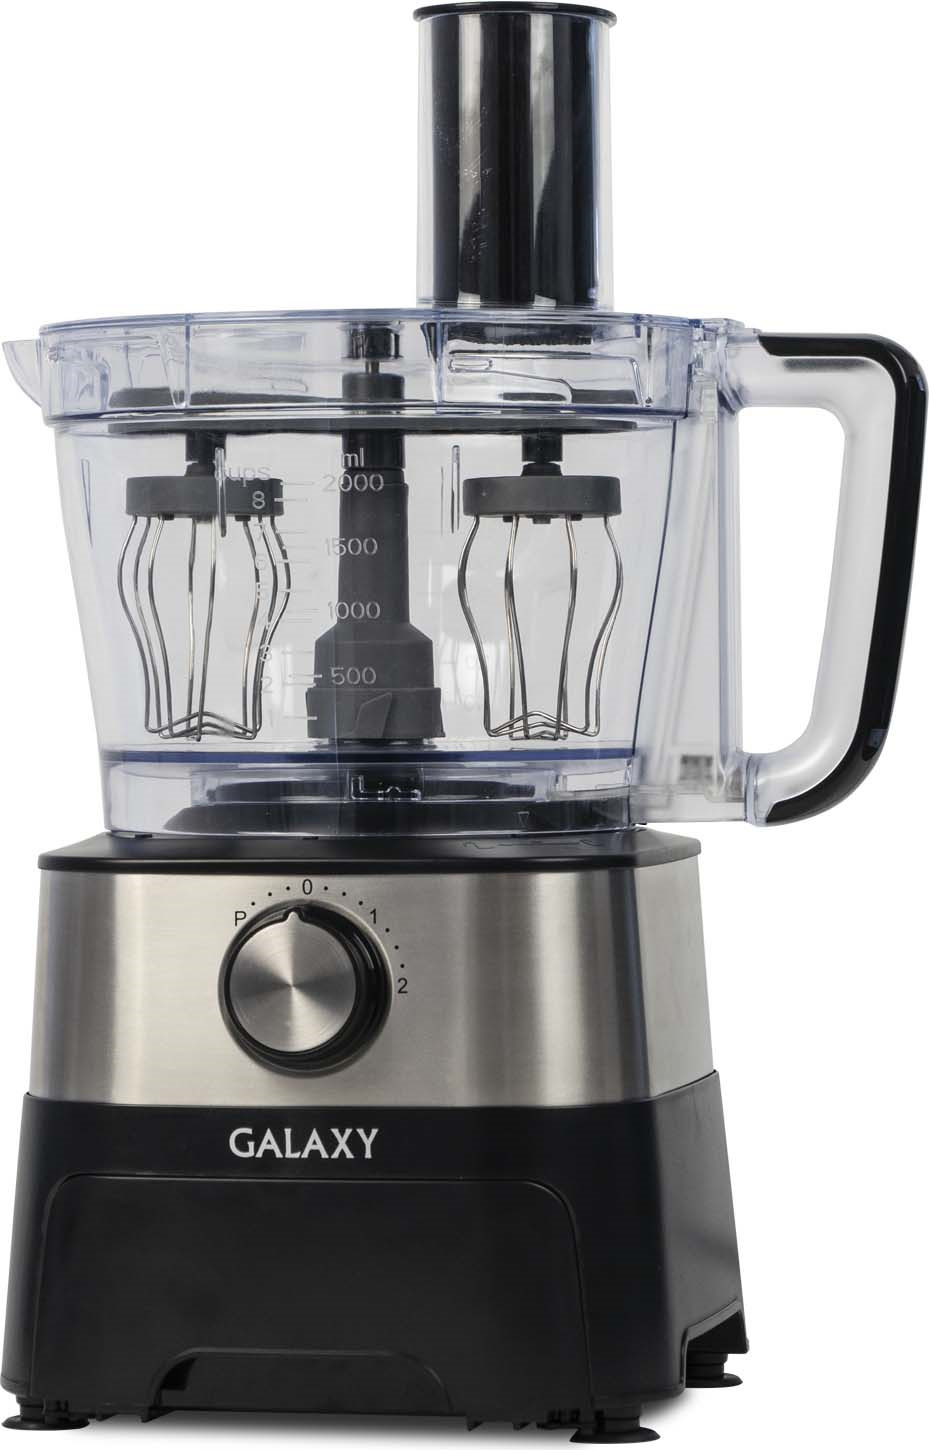 Кухонный комбайн Galaxy GL 2300, цвет: черный, серебристый